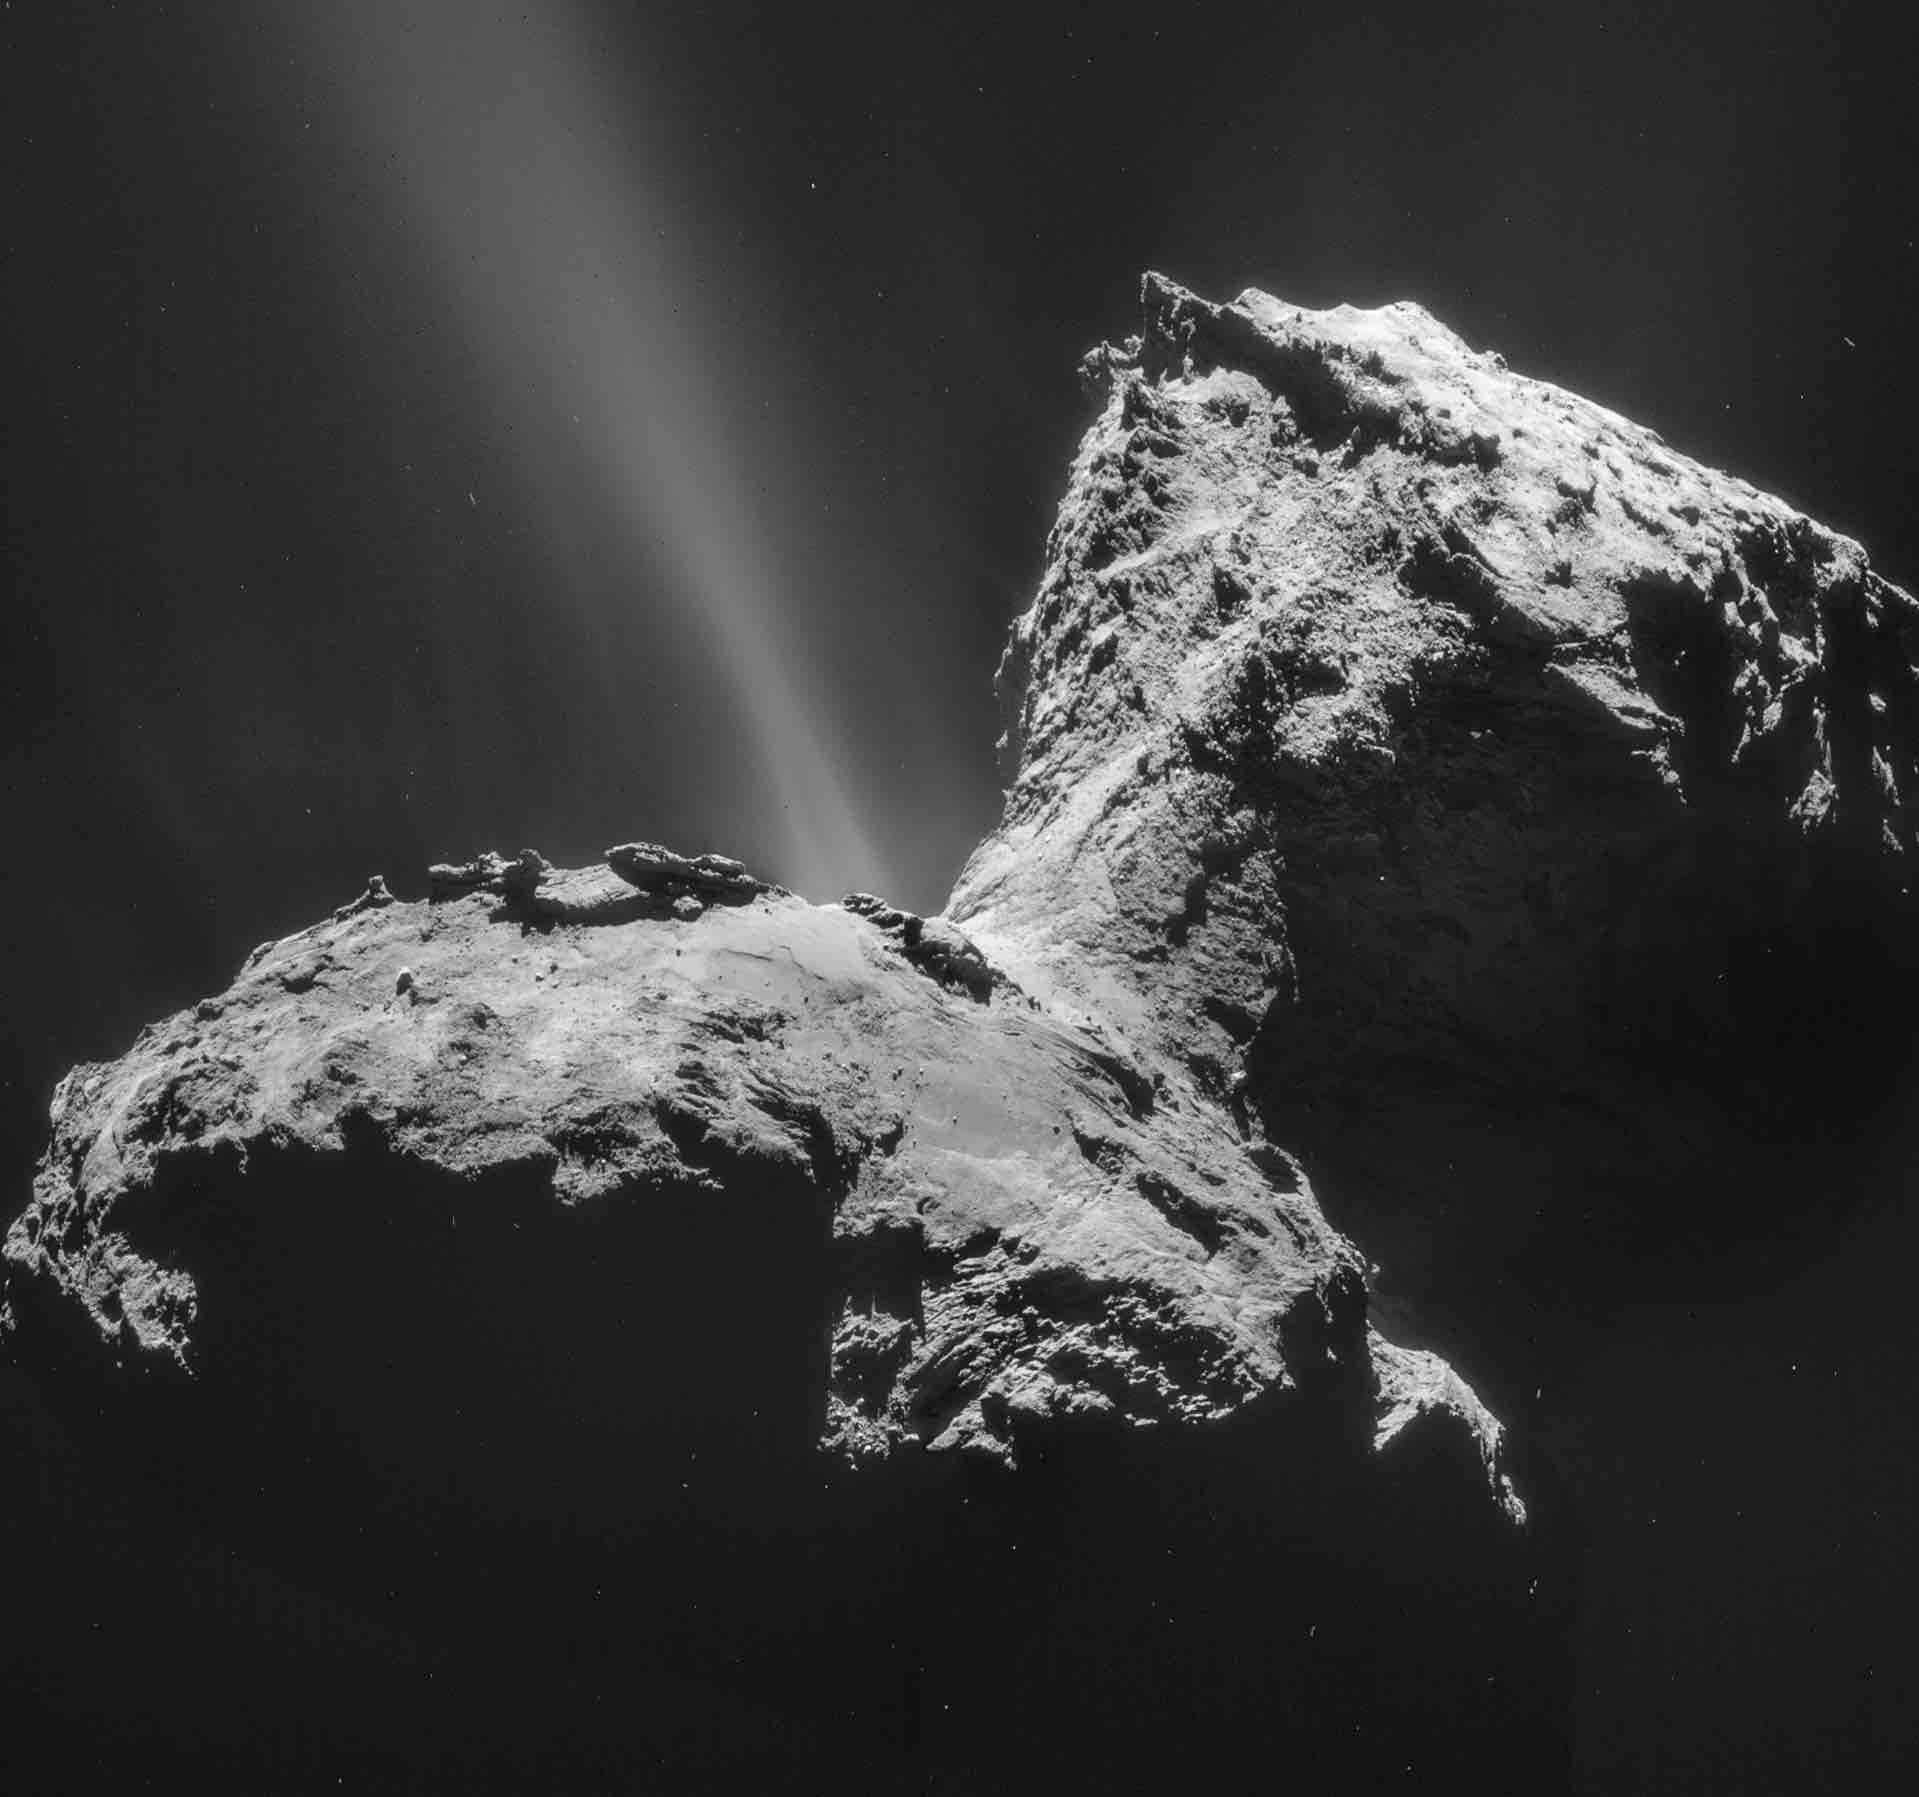 The surface of comet 67P/Churyumov-Gerasimenko photographed by the Rosetta spacecraft